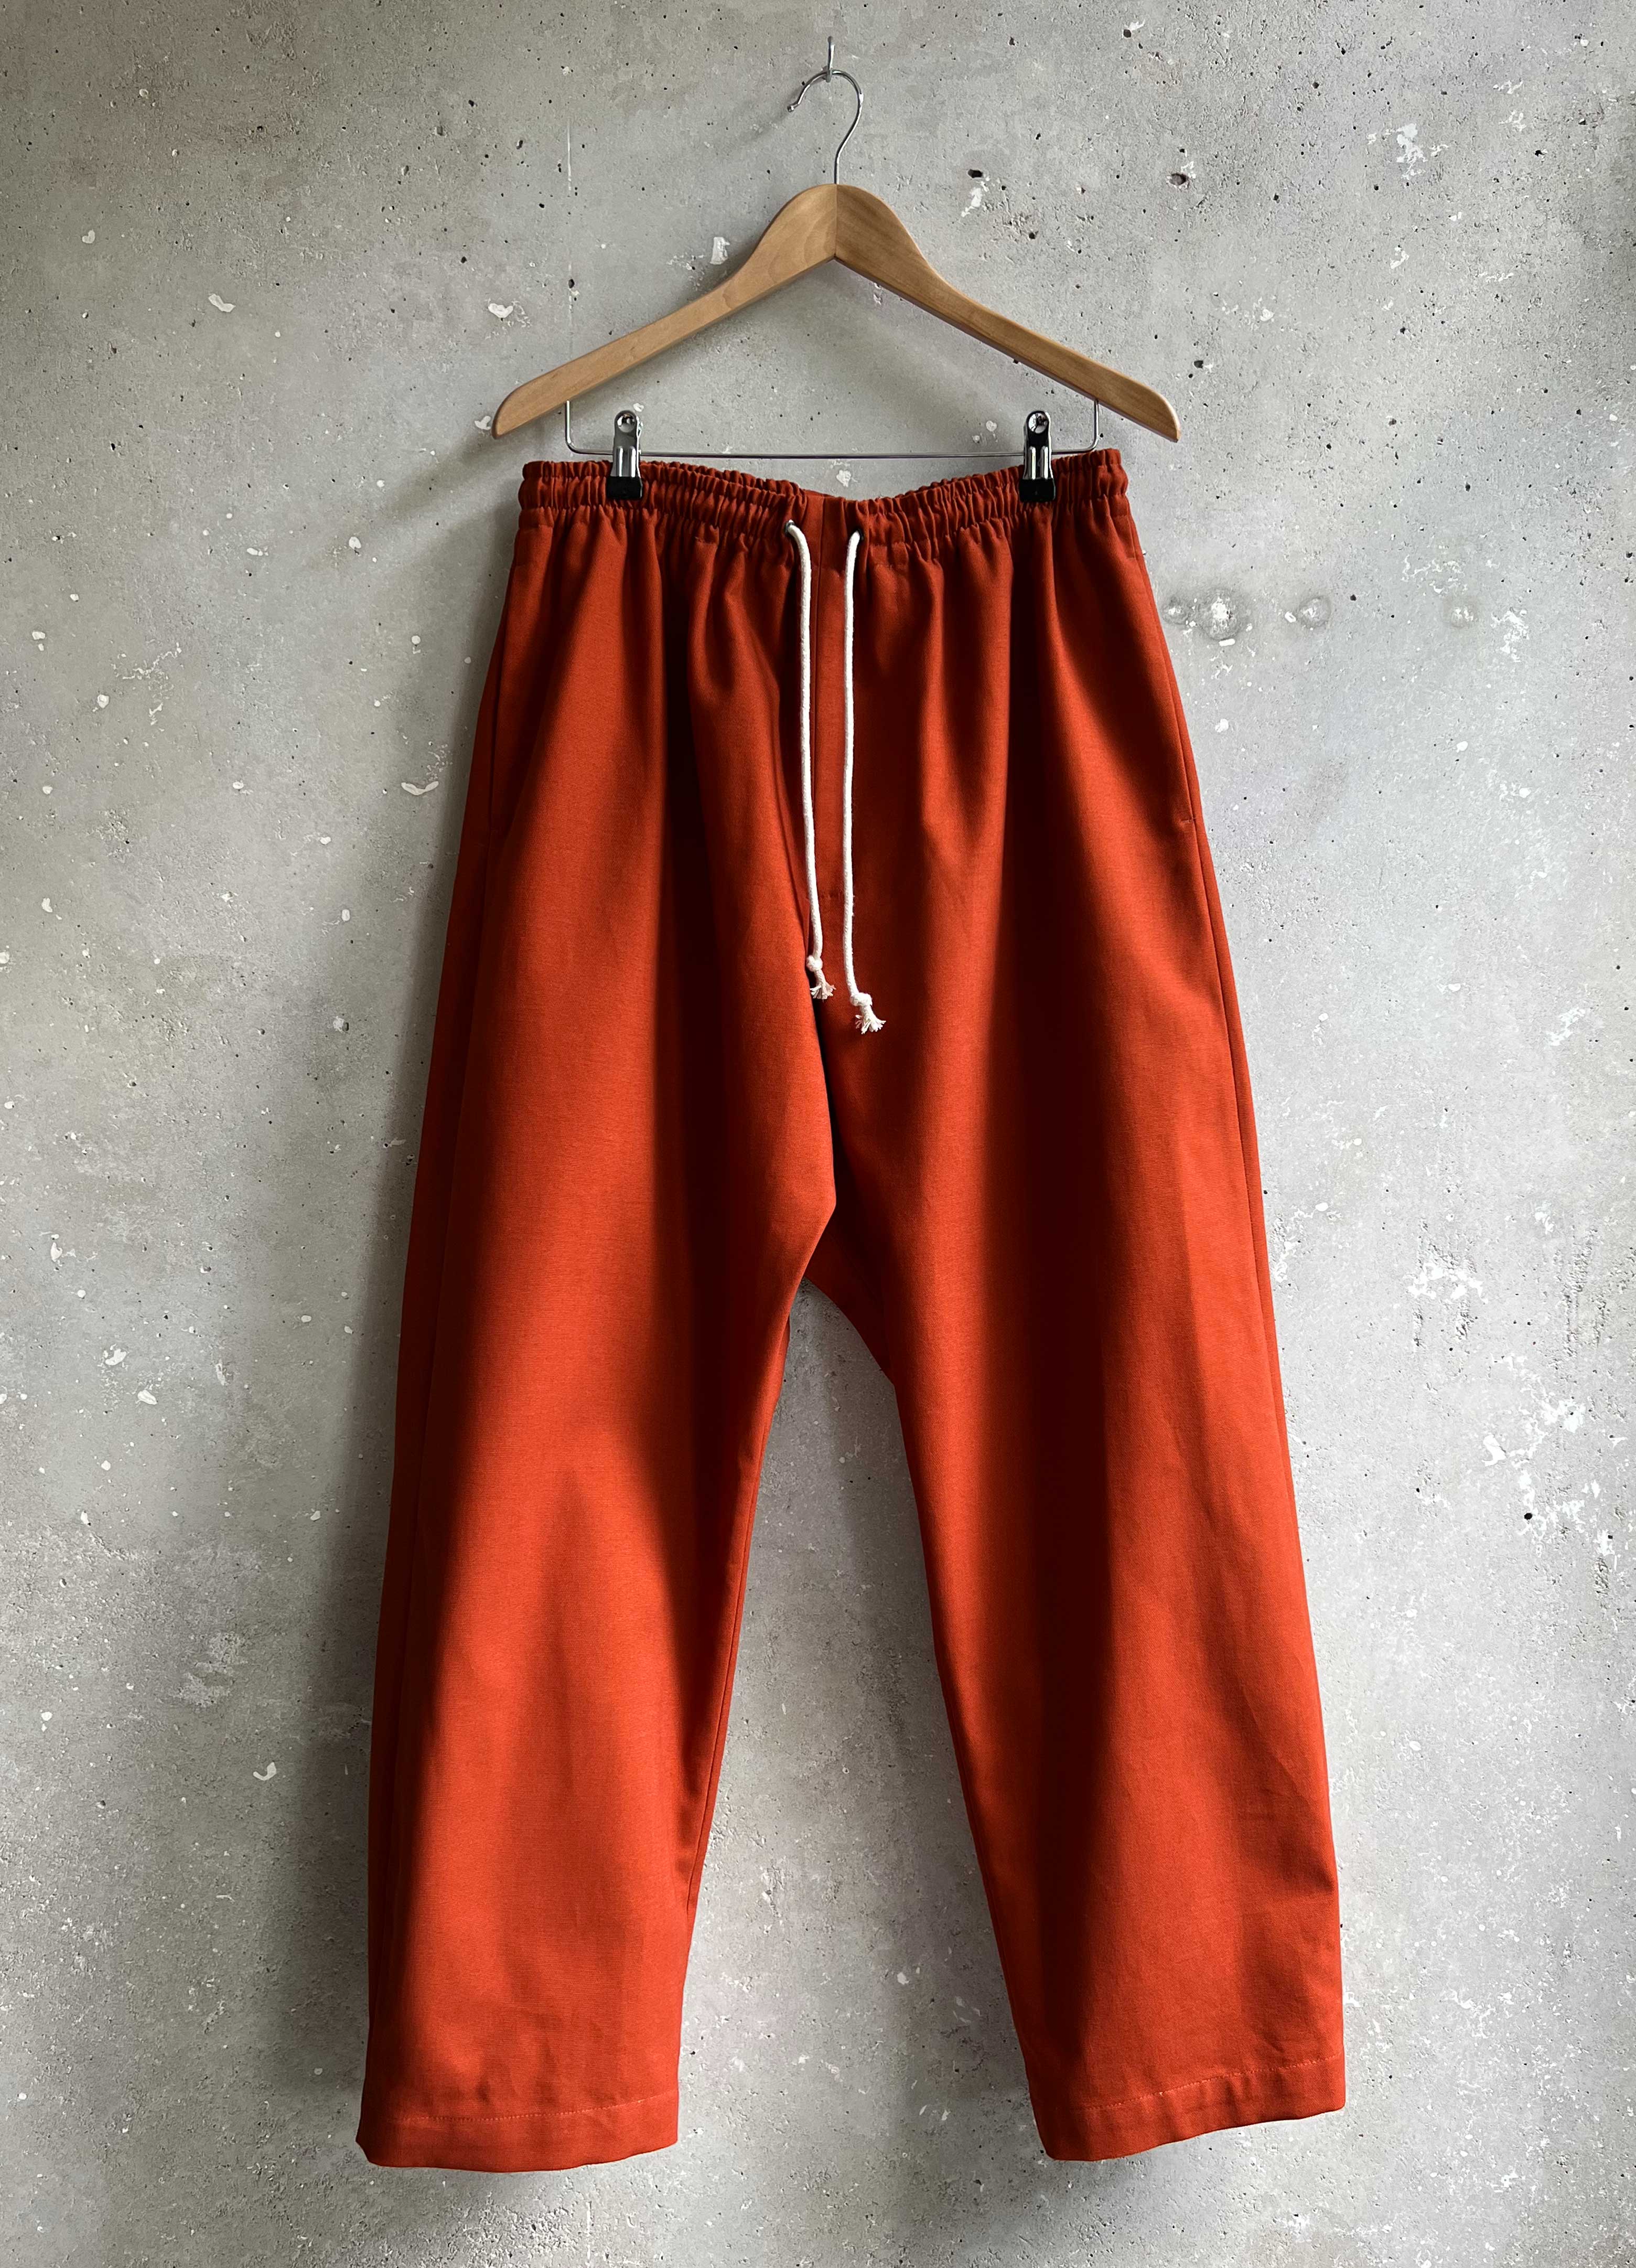 Cotton Orange Pants